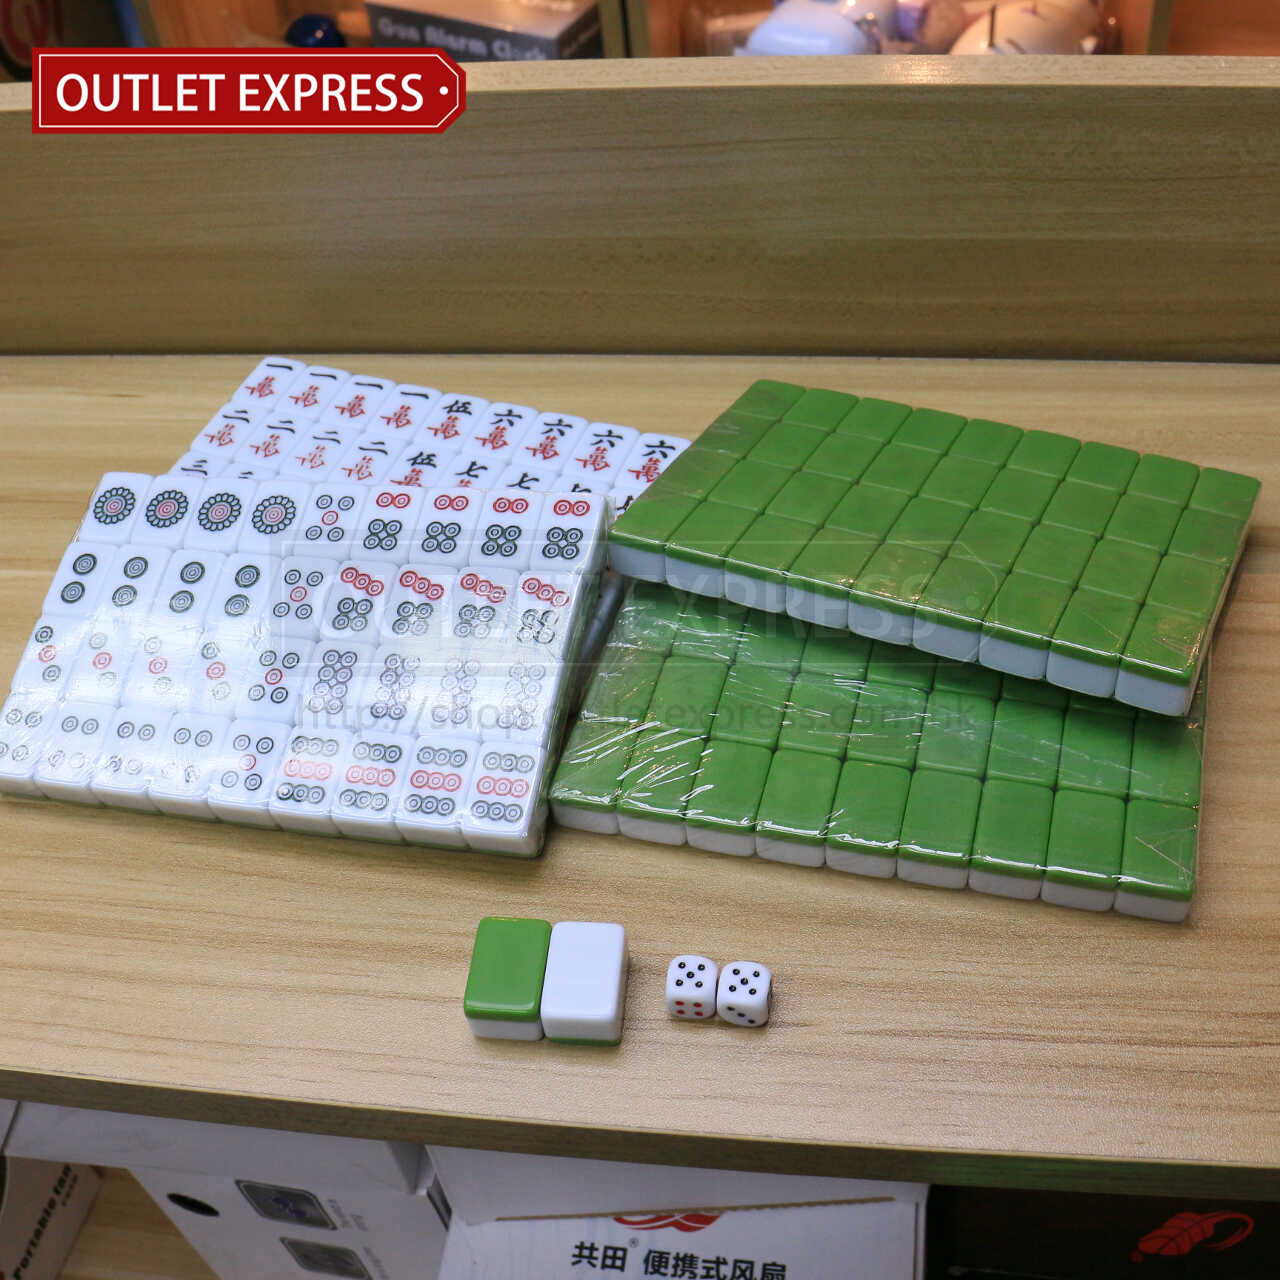 20mm 迷你旅行麻雀牌 - Outlet Express HK 生活百貨城實拍圖